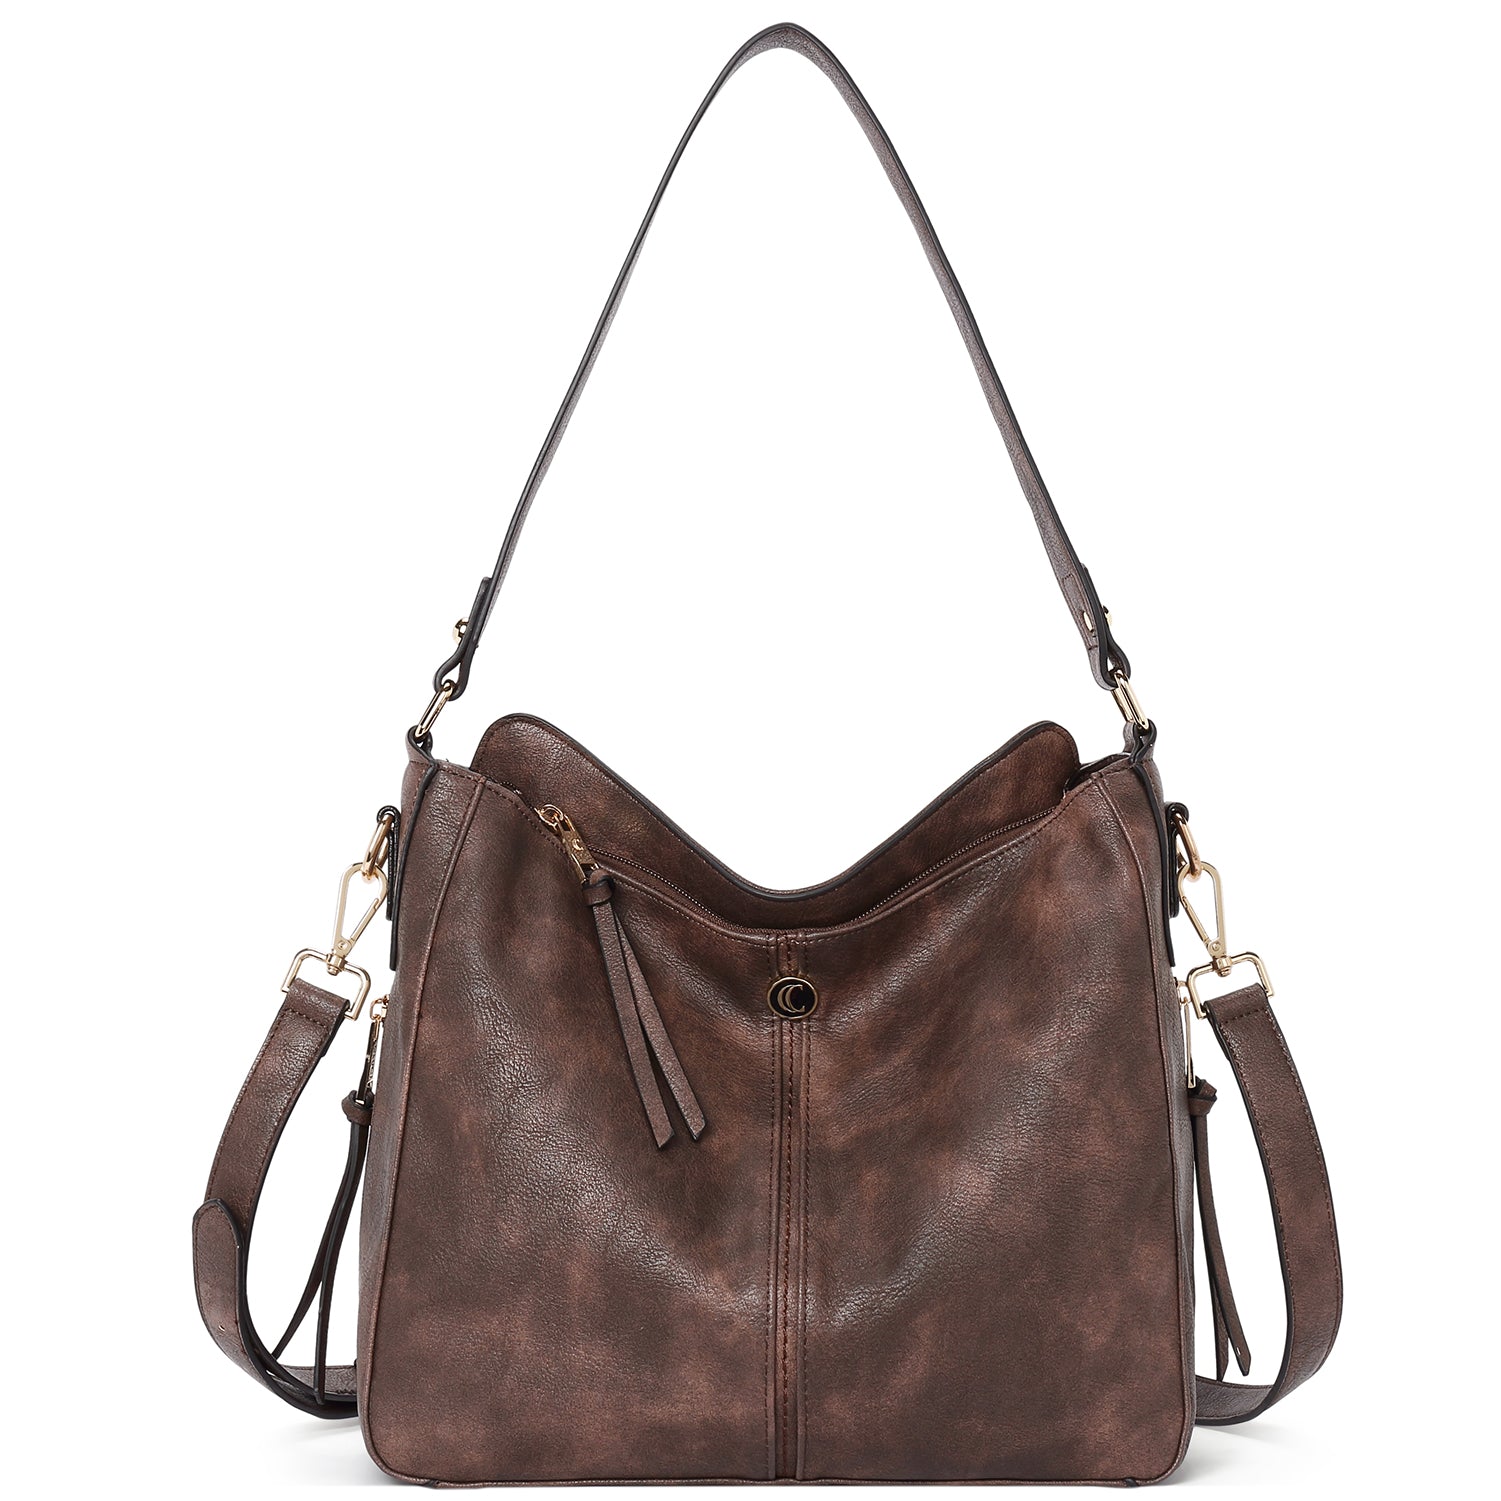 Gucci Linea A Large Guccissima Leather Hobo Bag | Leather hobo bag, Handbag  outfit, Leather hobo handbags